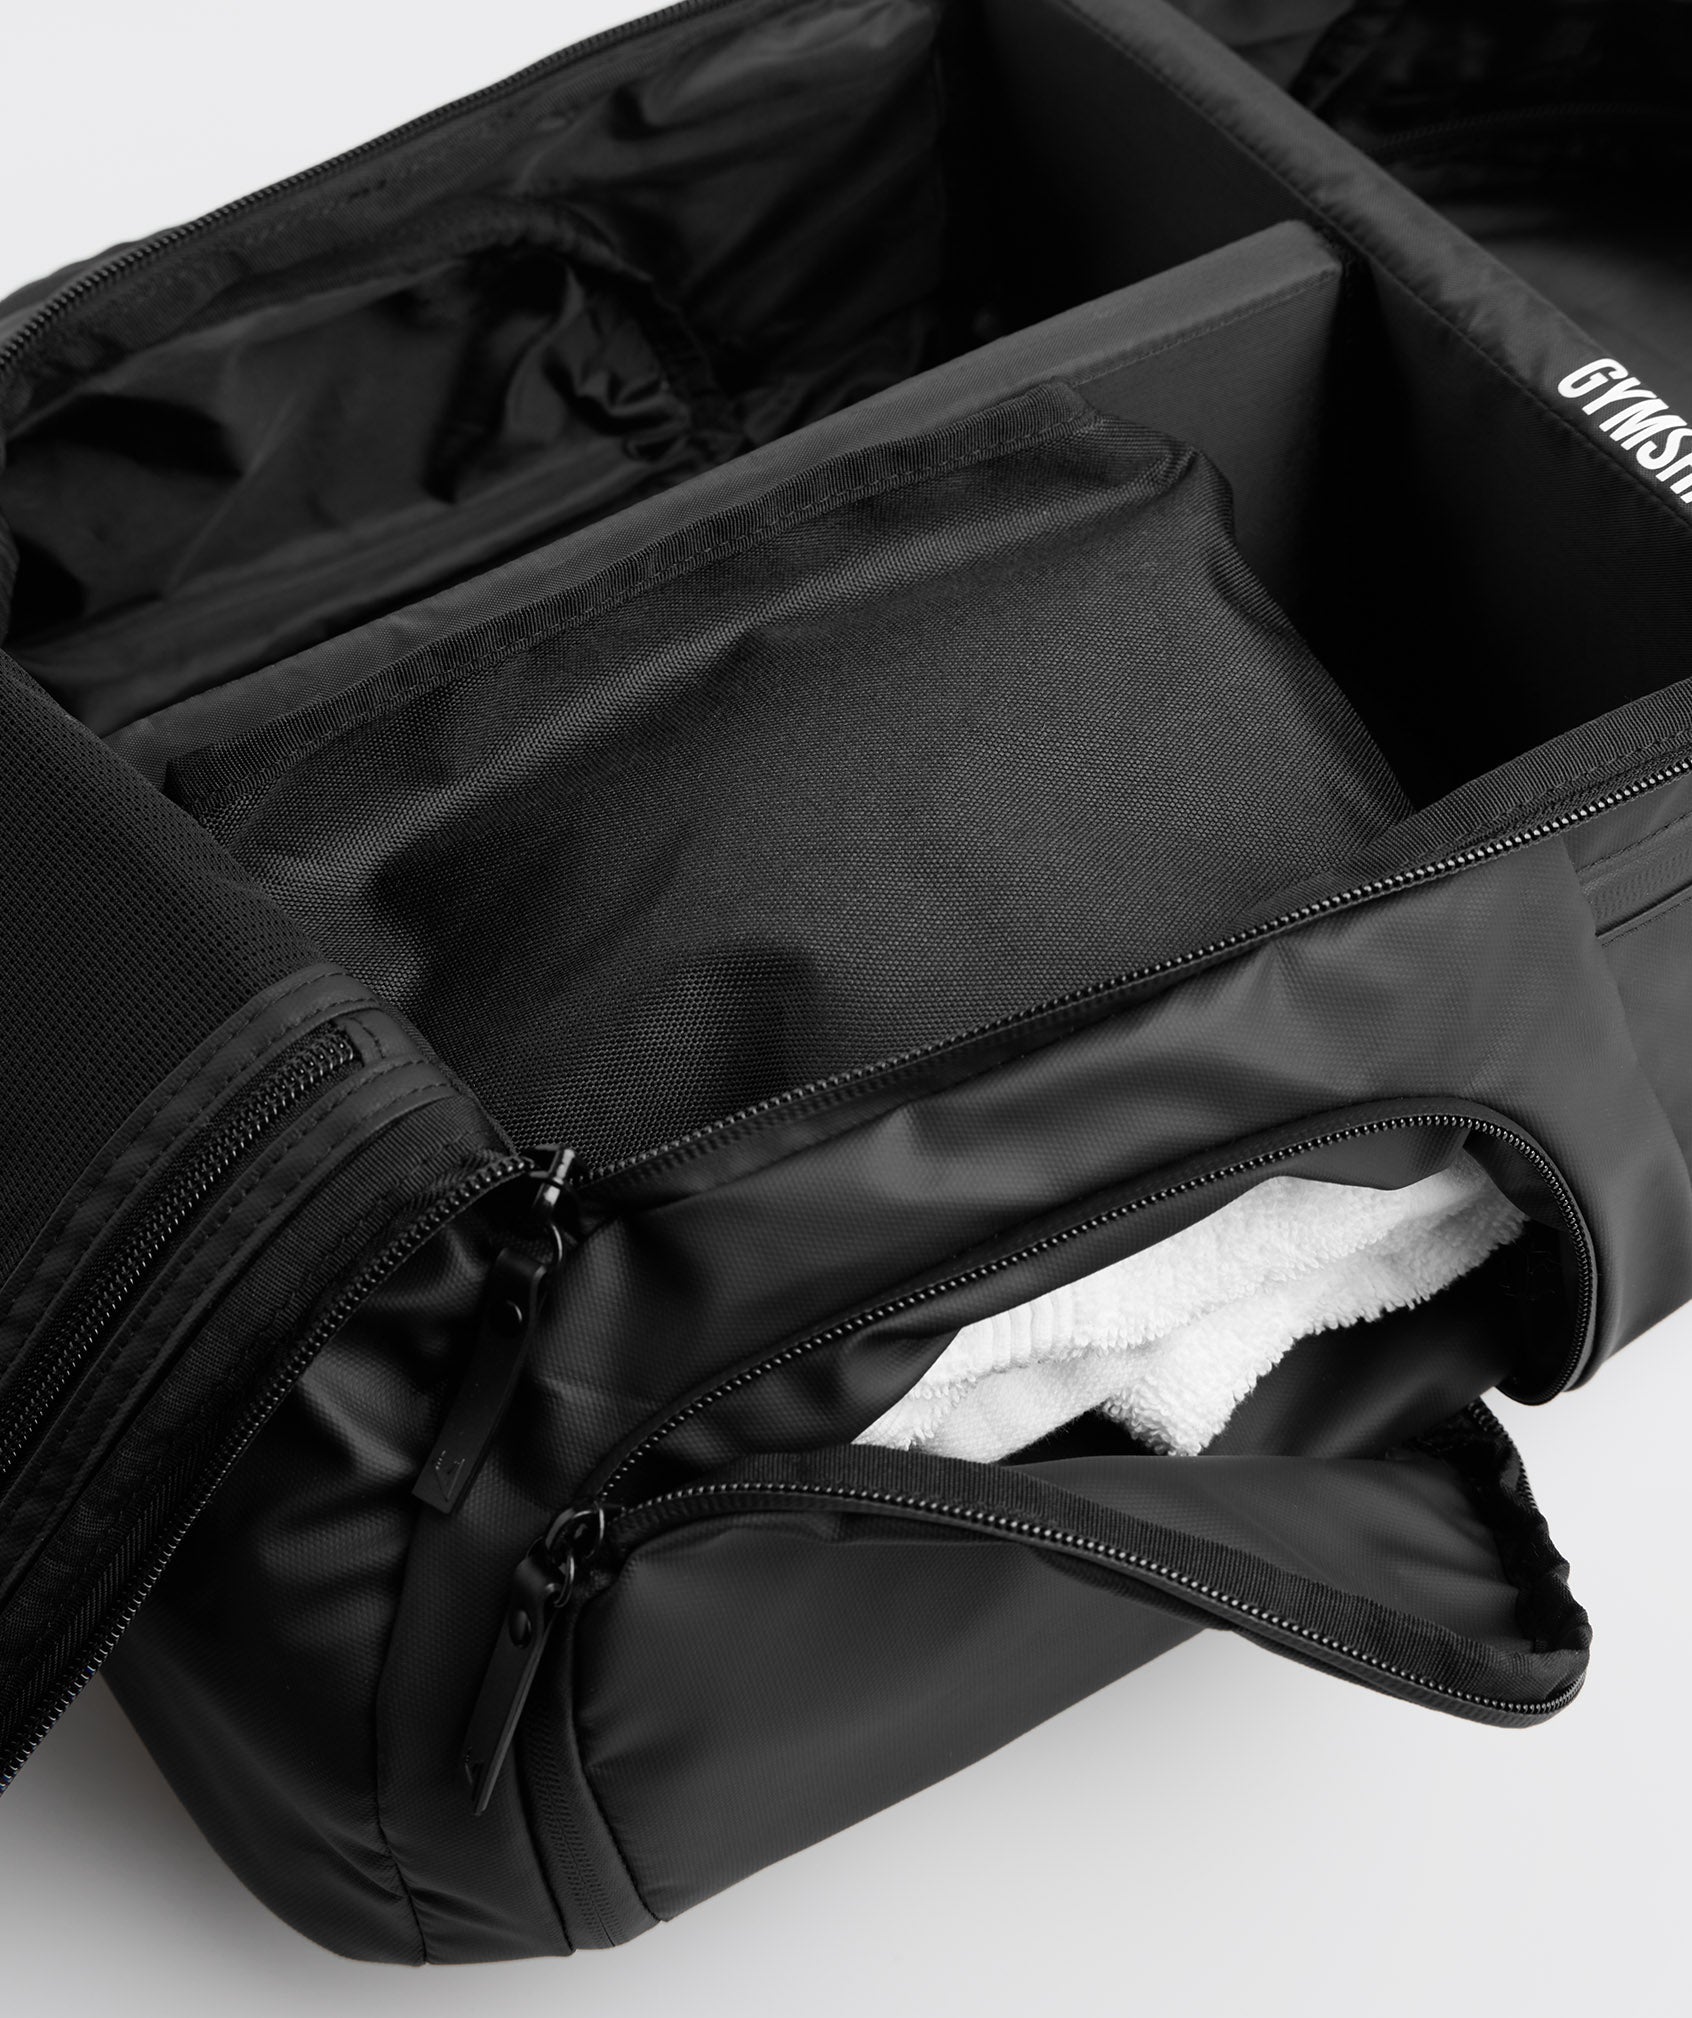 X-Series Bag 0.3 in Black - view 9